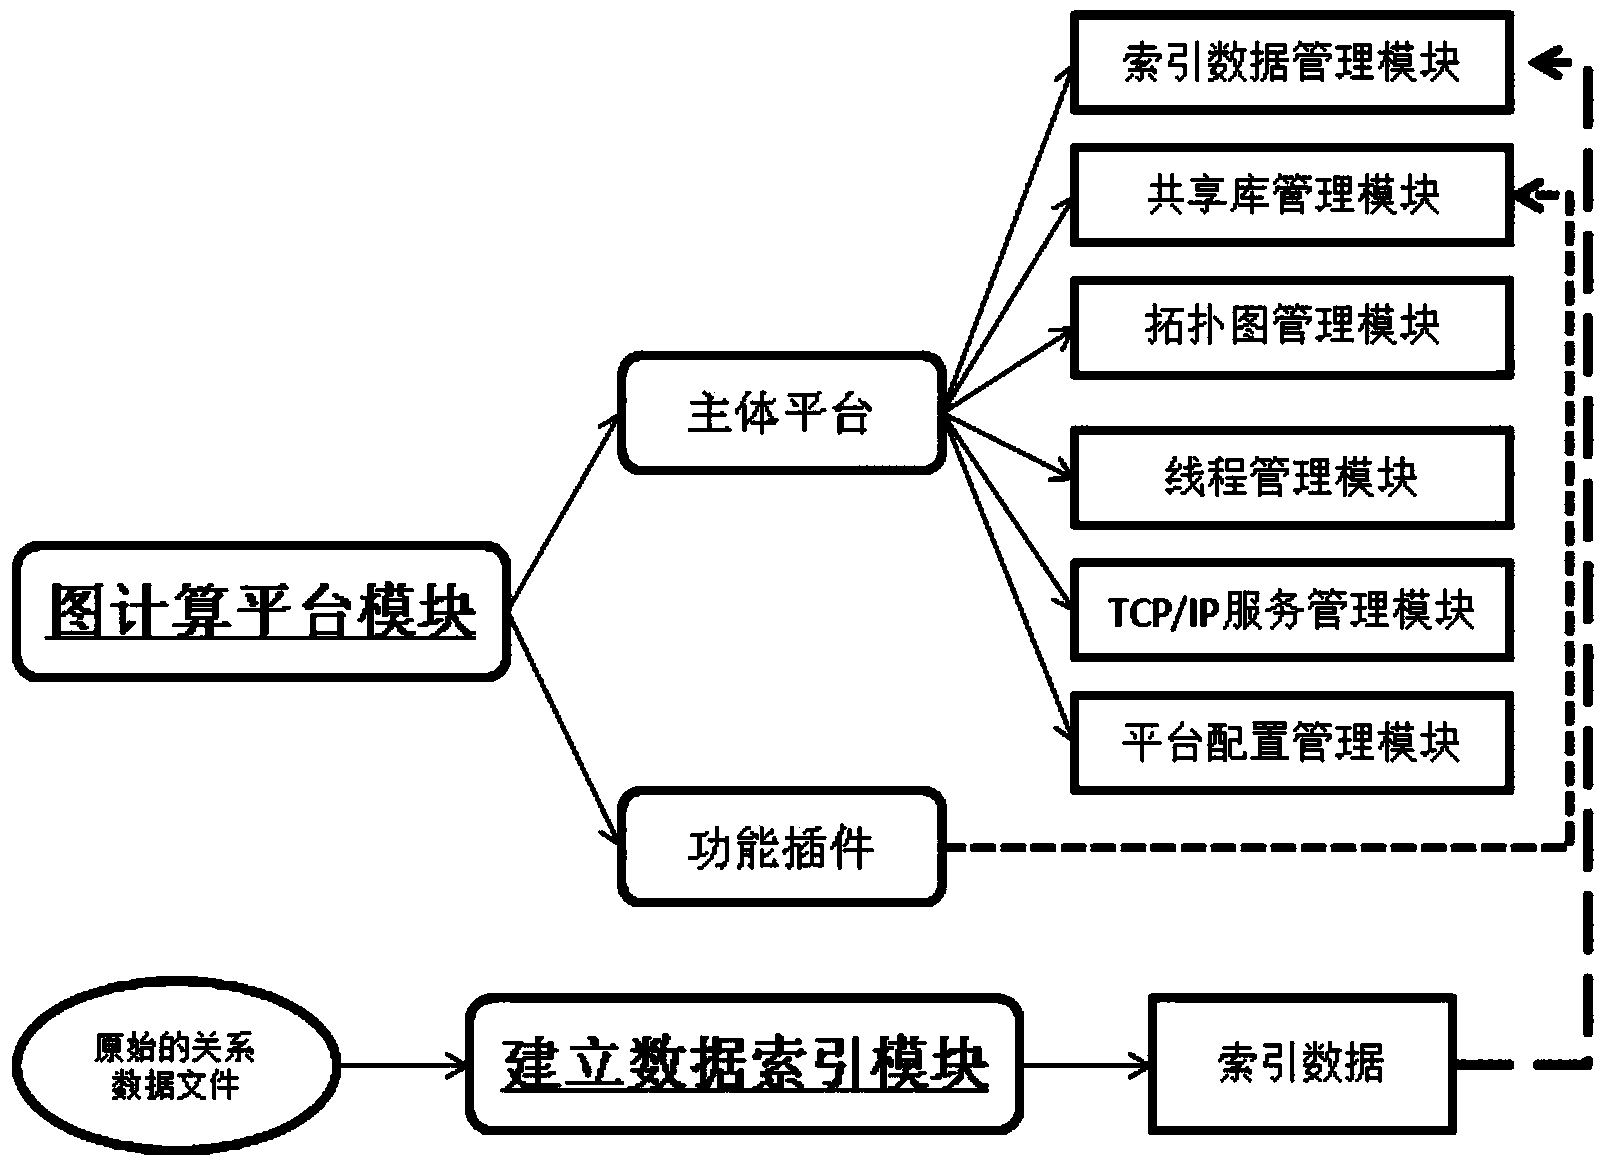 Graph computation method and engine